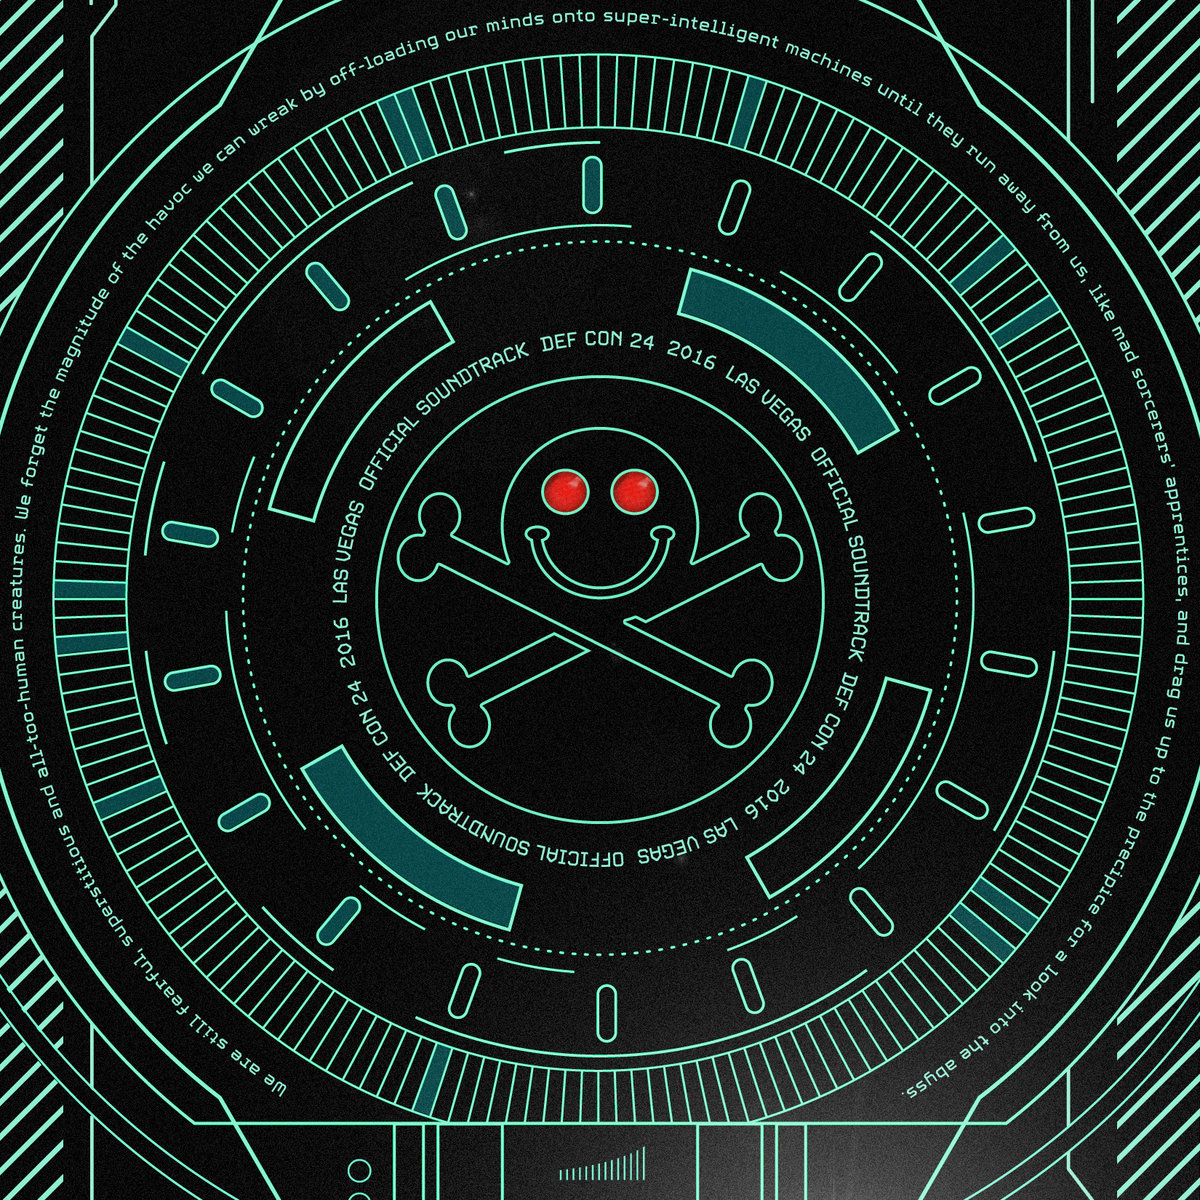 Psymbionic - Short Circuit @ 'DEF CON 24: The Official Soundtrack' album (def con, drum & bass)